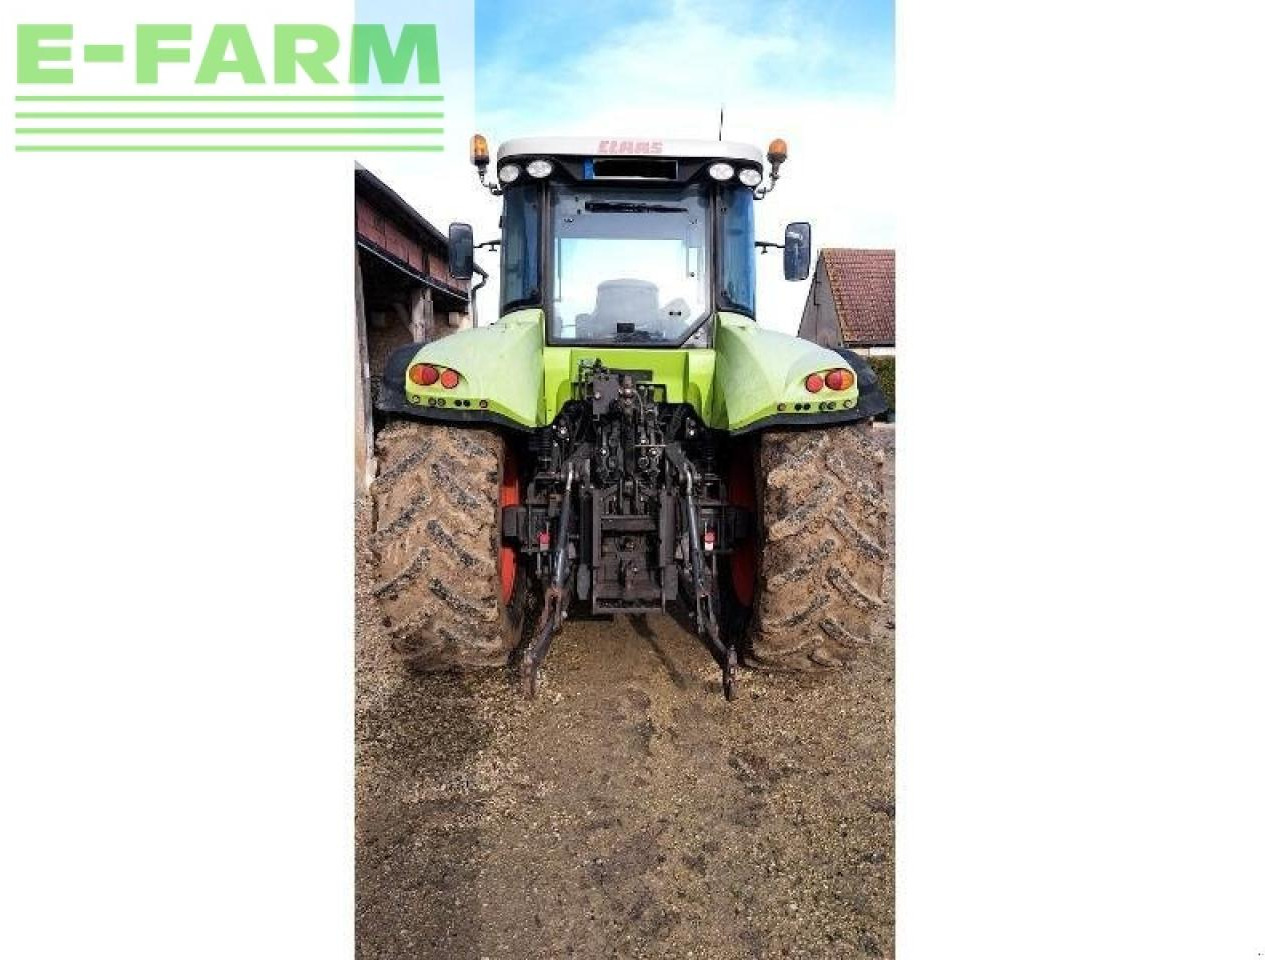 Farm tractor CLAAS arion 640